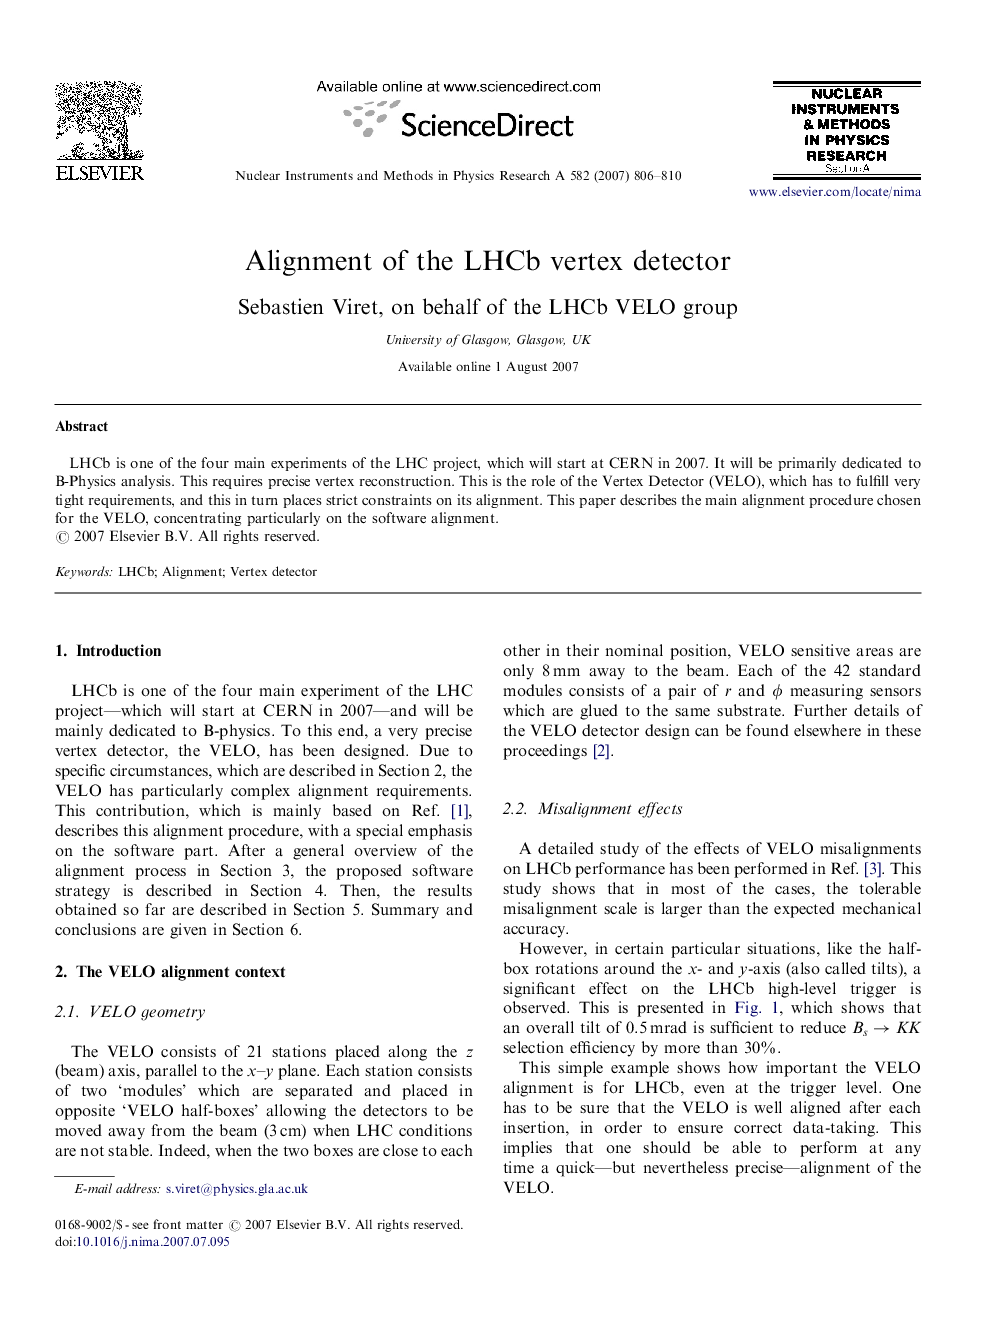 Alignment of the LHCb vertex detector